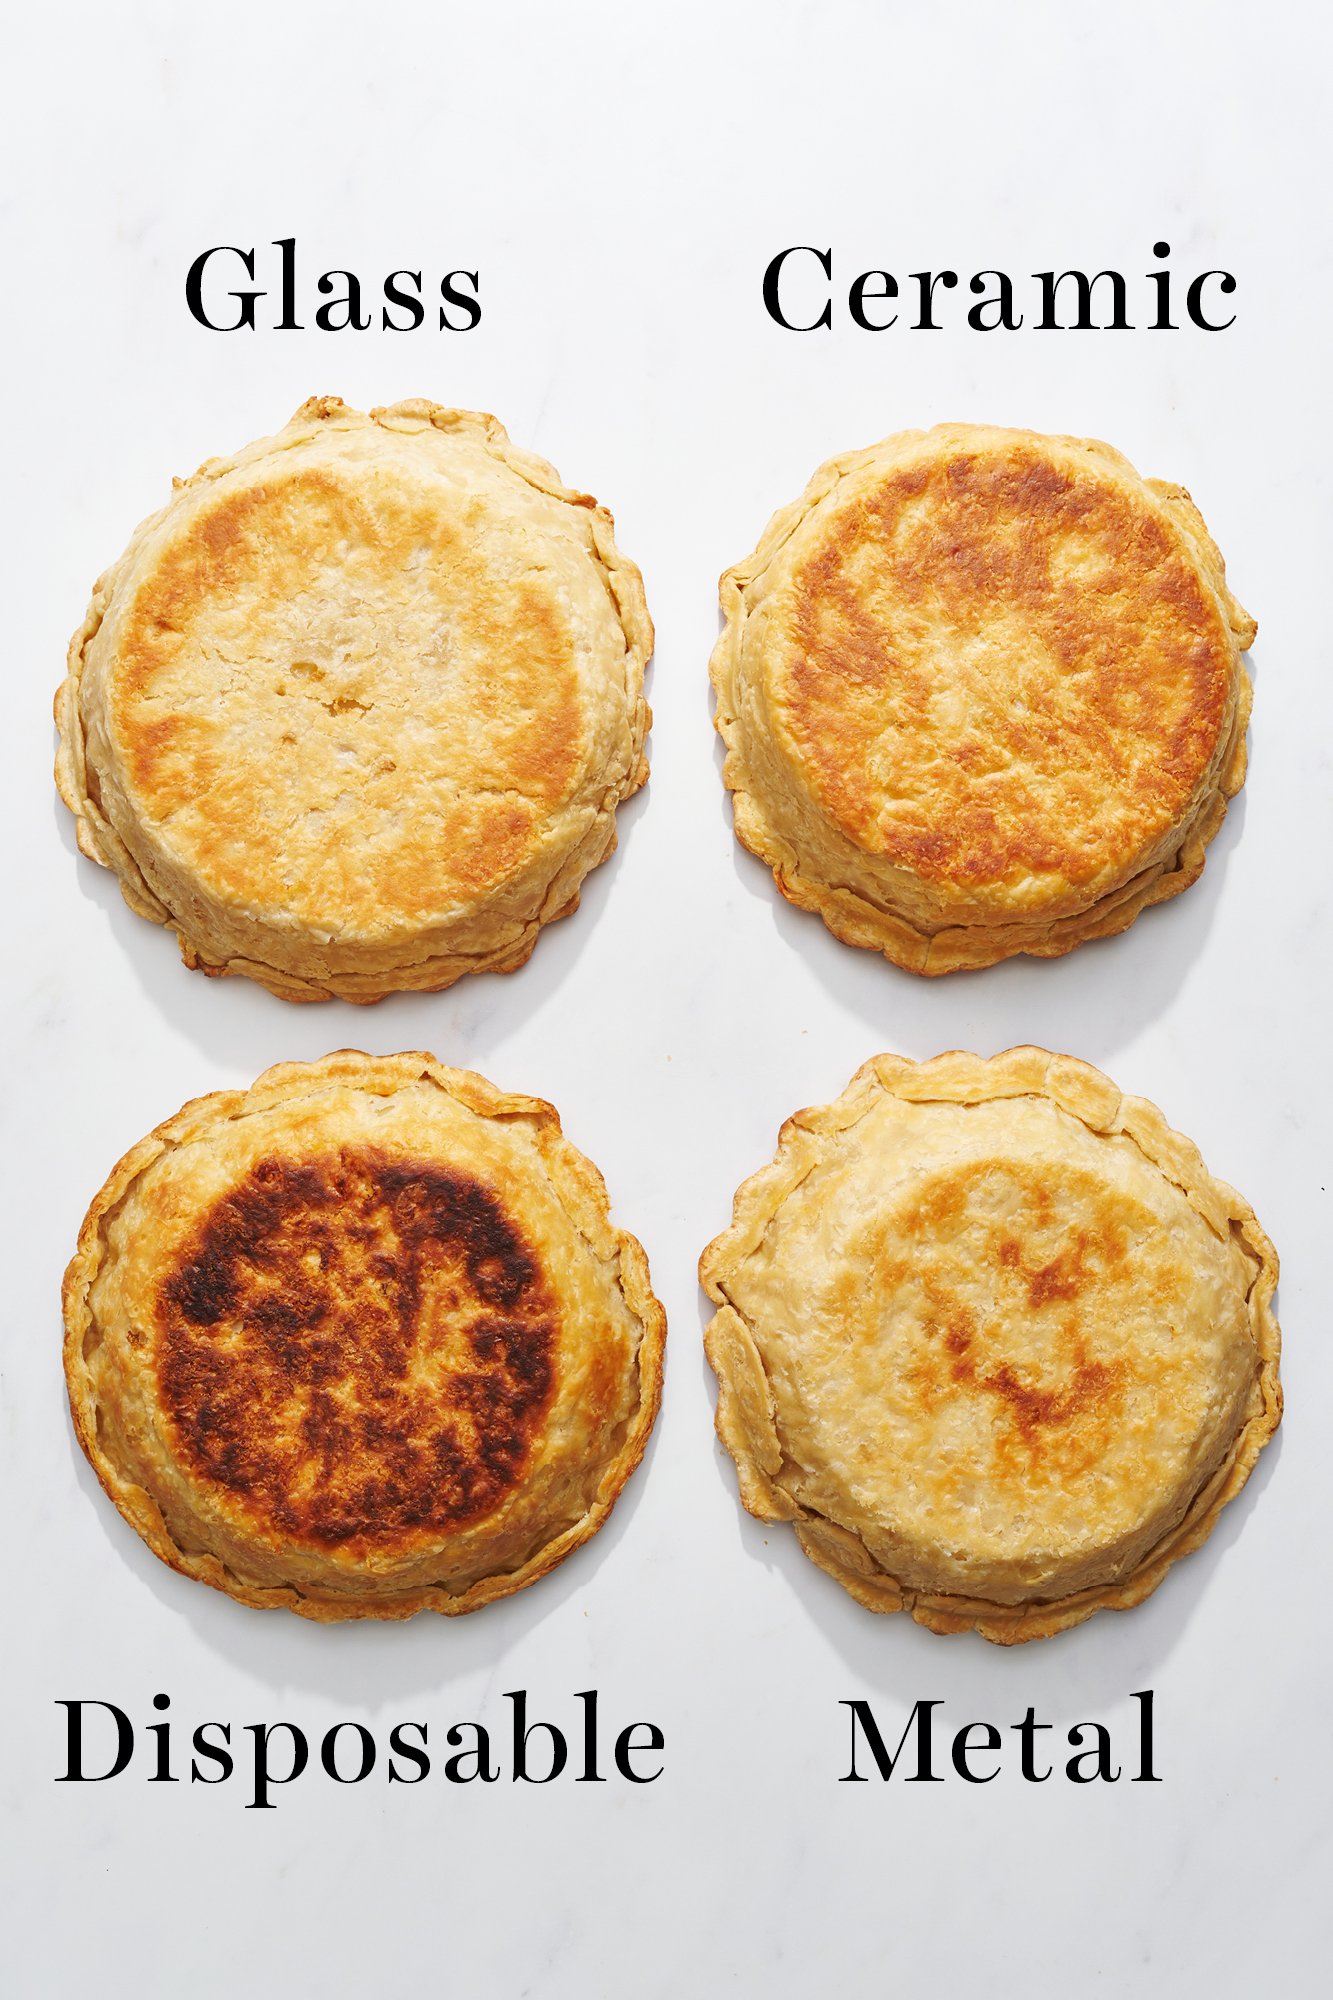 The 11 Best Pie Pans of 2023